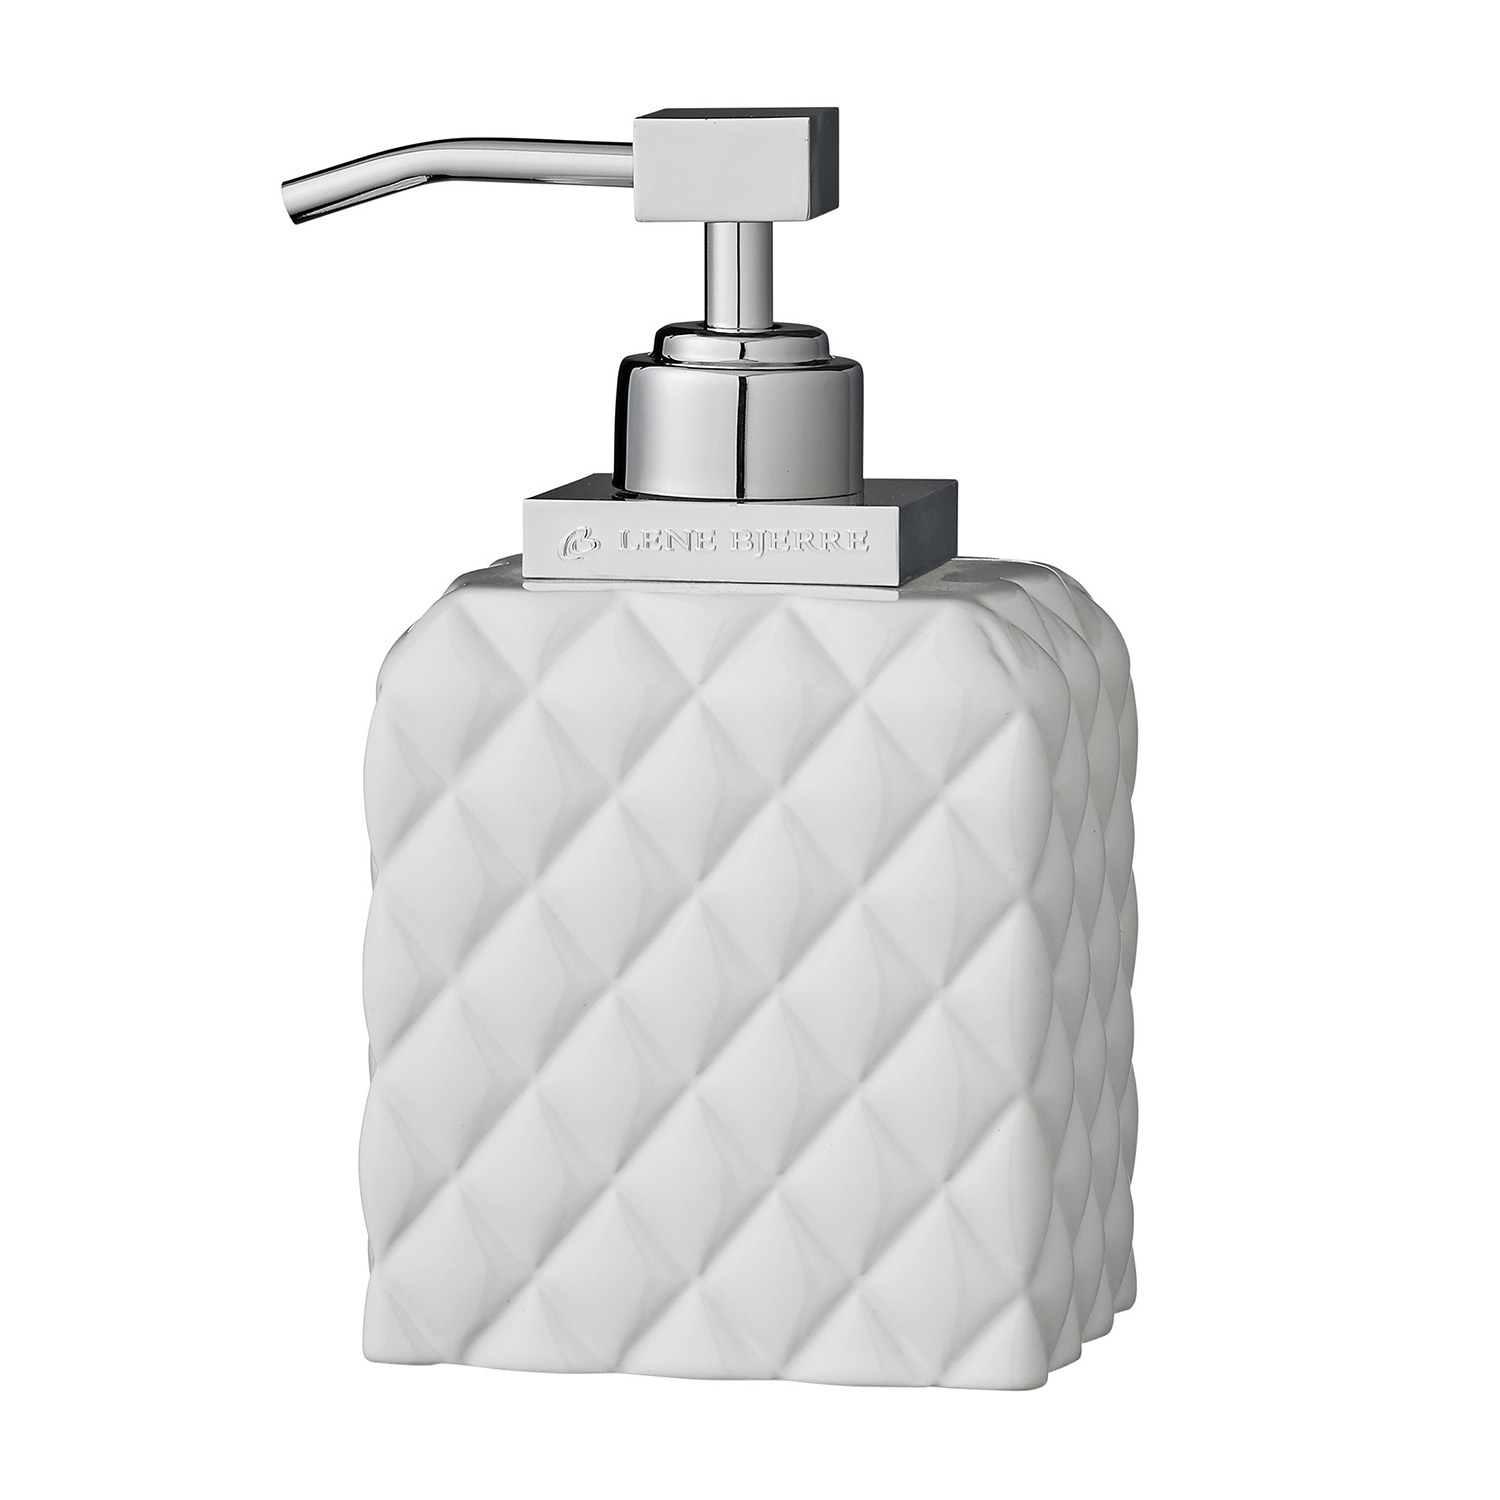 https://api-prod.royaldesign.se/api/products/image/2/lene-bjerre-portia-soap-dispenser-5